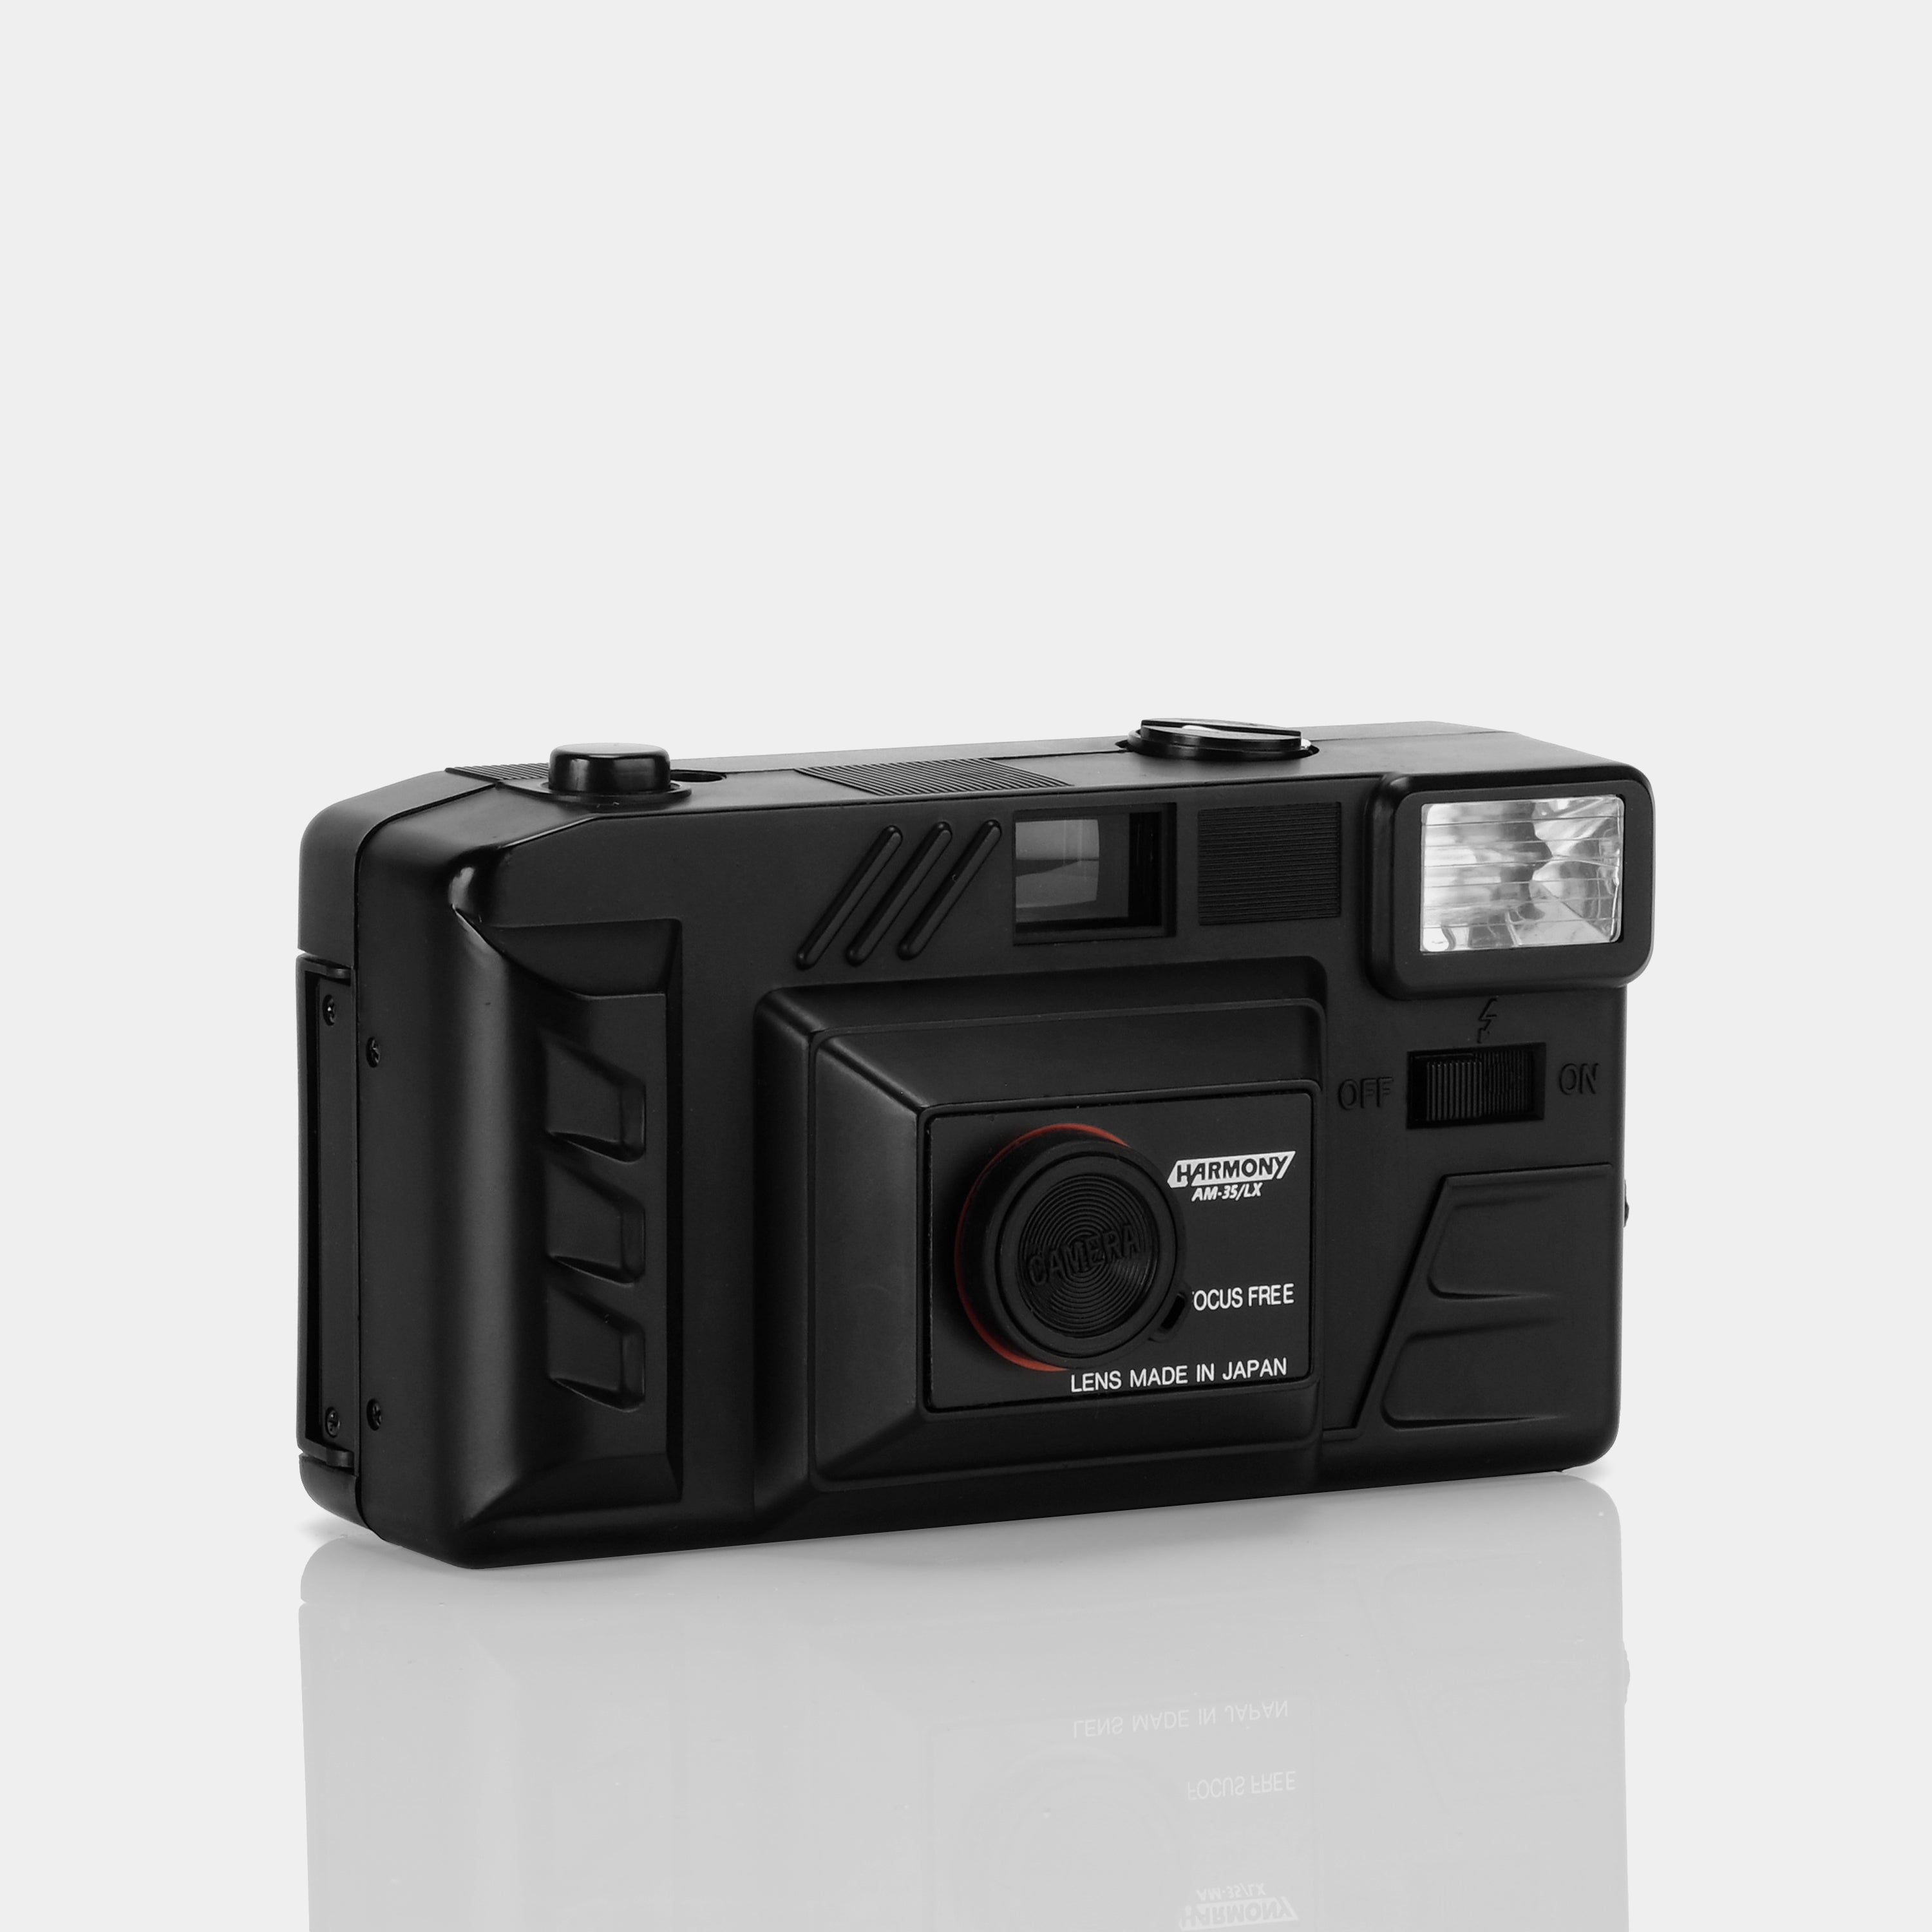 Harmony AM-35/LX 35mm Point and Shoot Film Camera